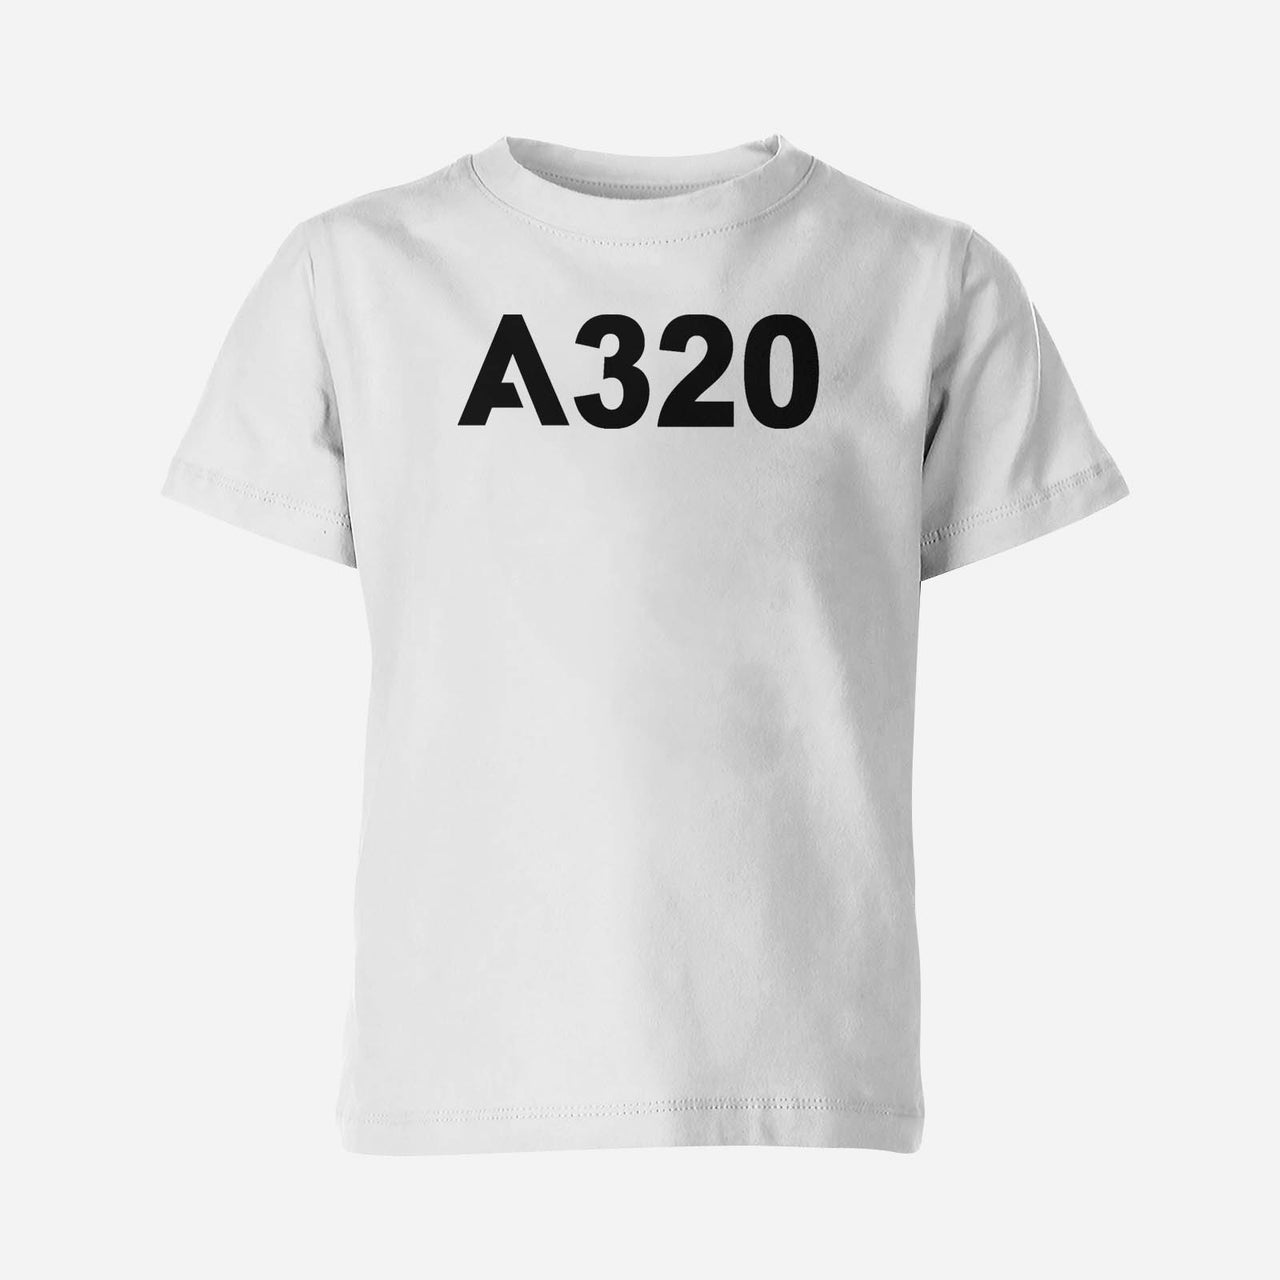 A320 Flat Designed Children T-Shirts